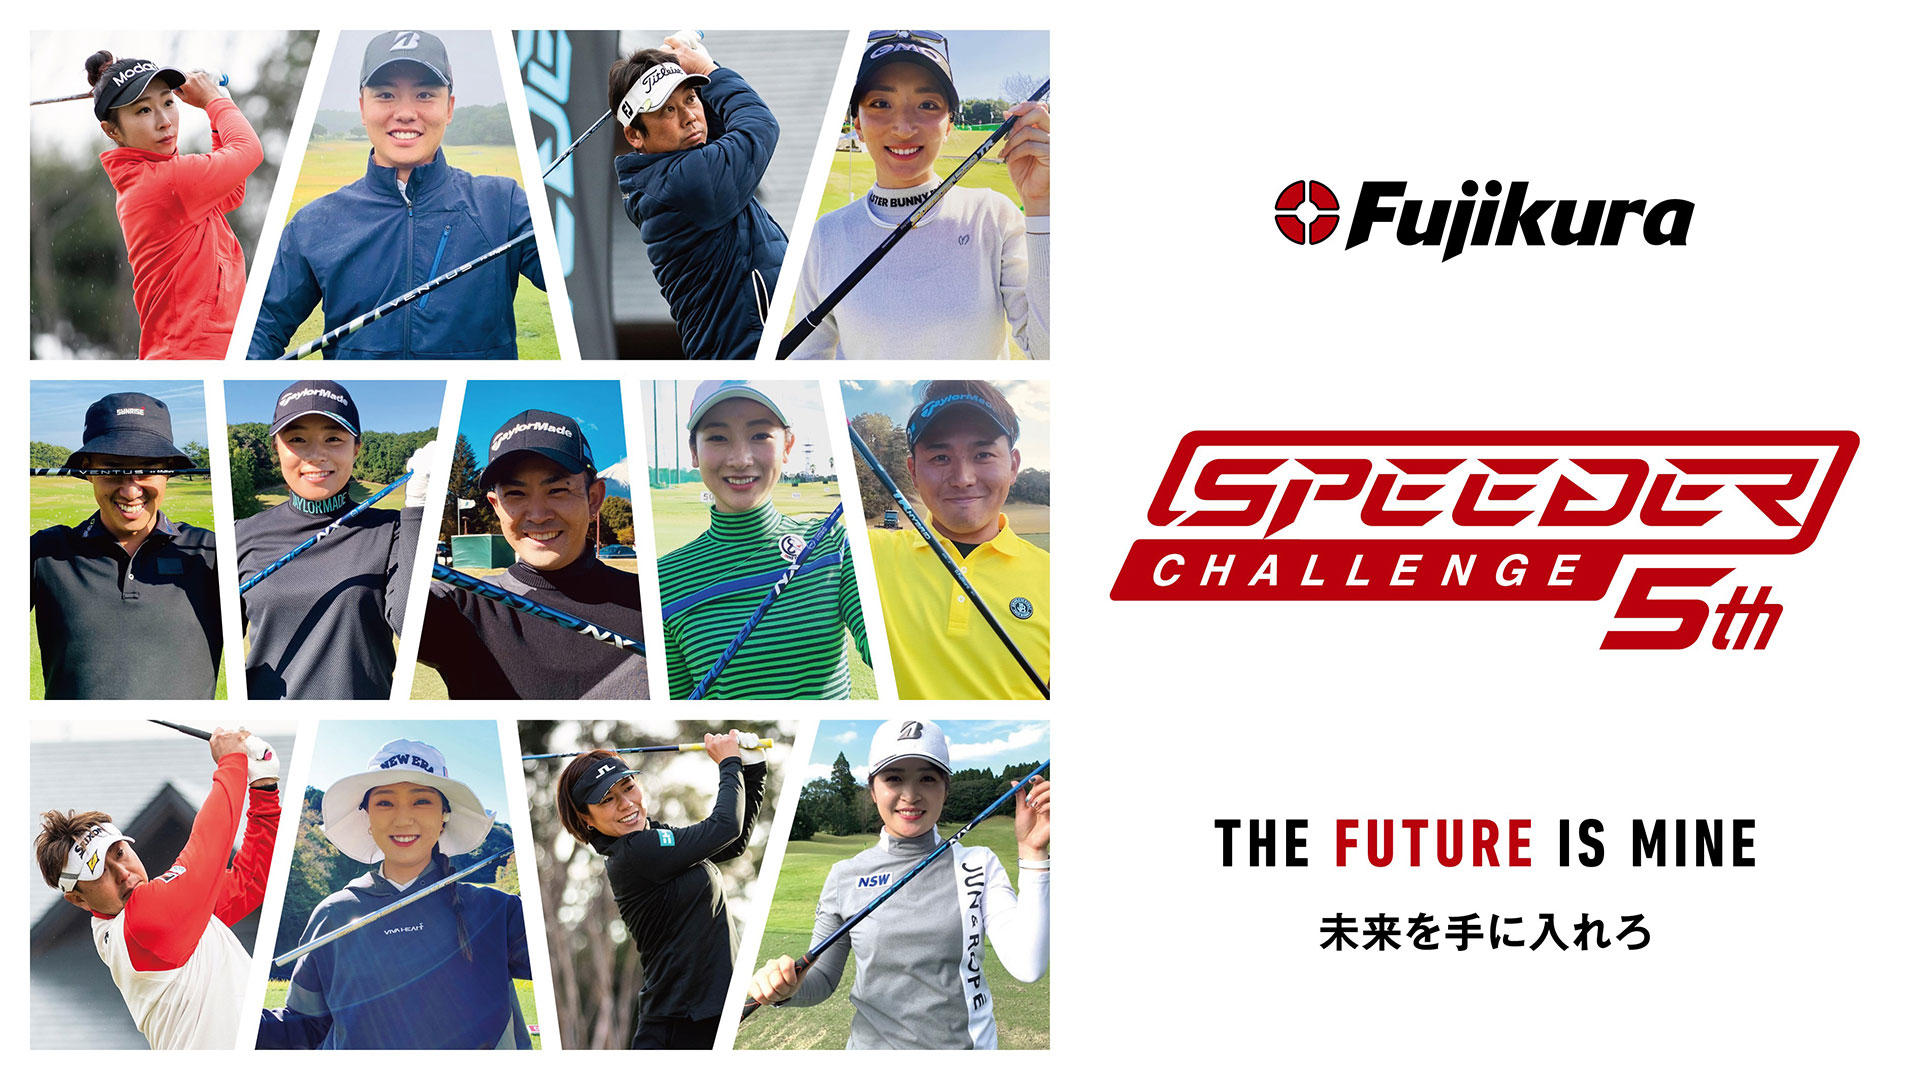 The 5th Fujikura presents Speeder Challenge 2022【シングル選手権】